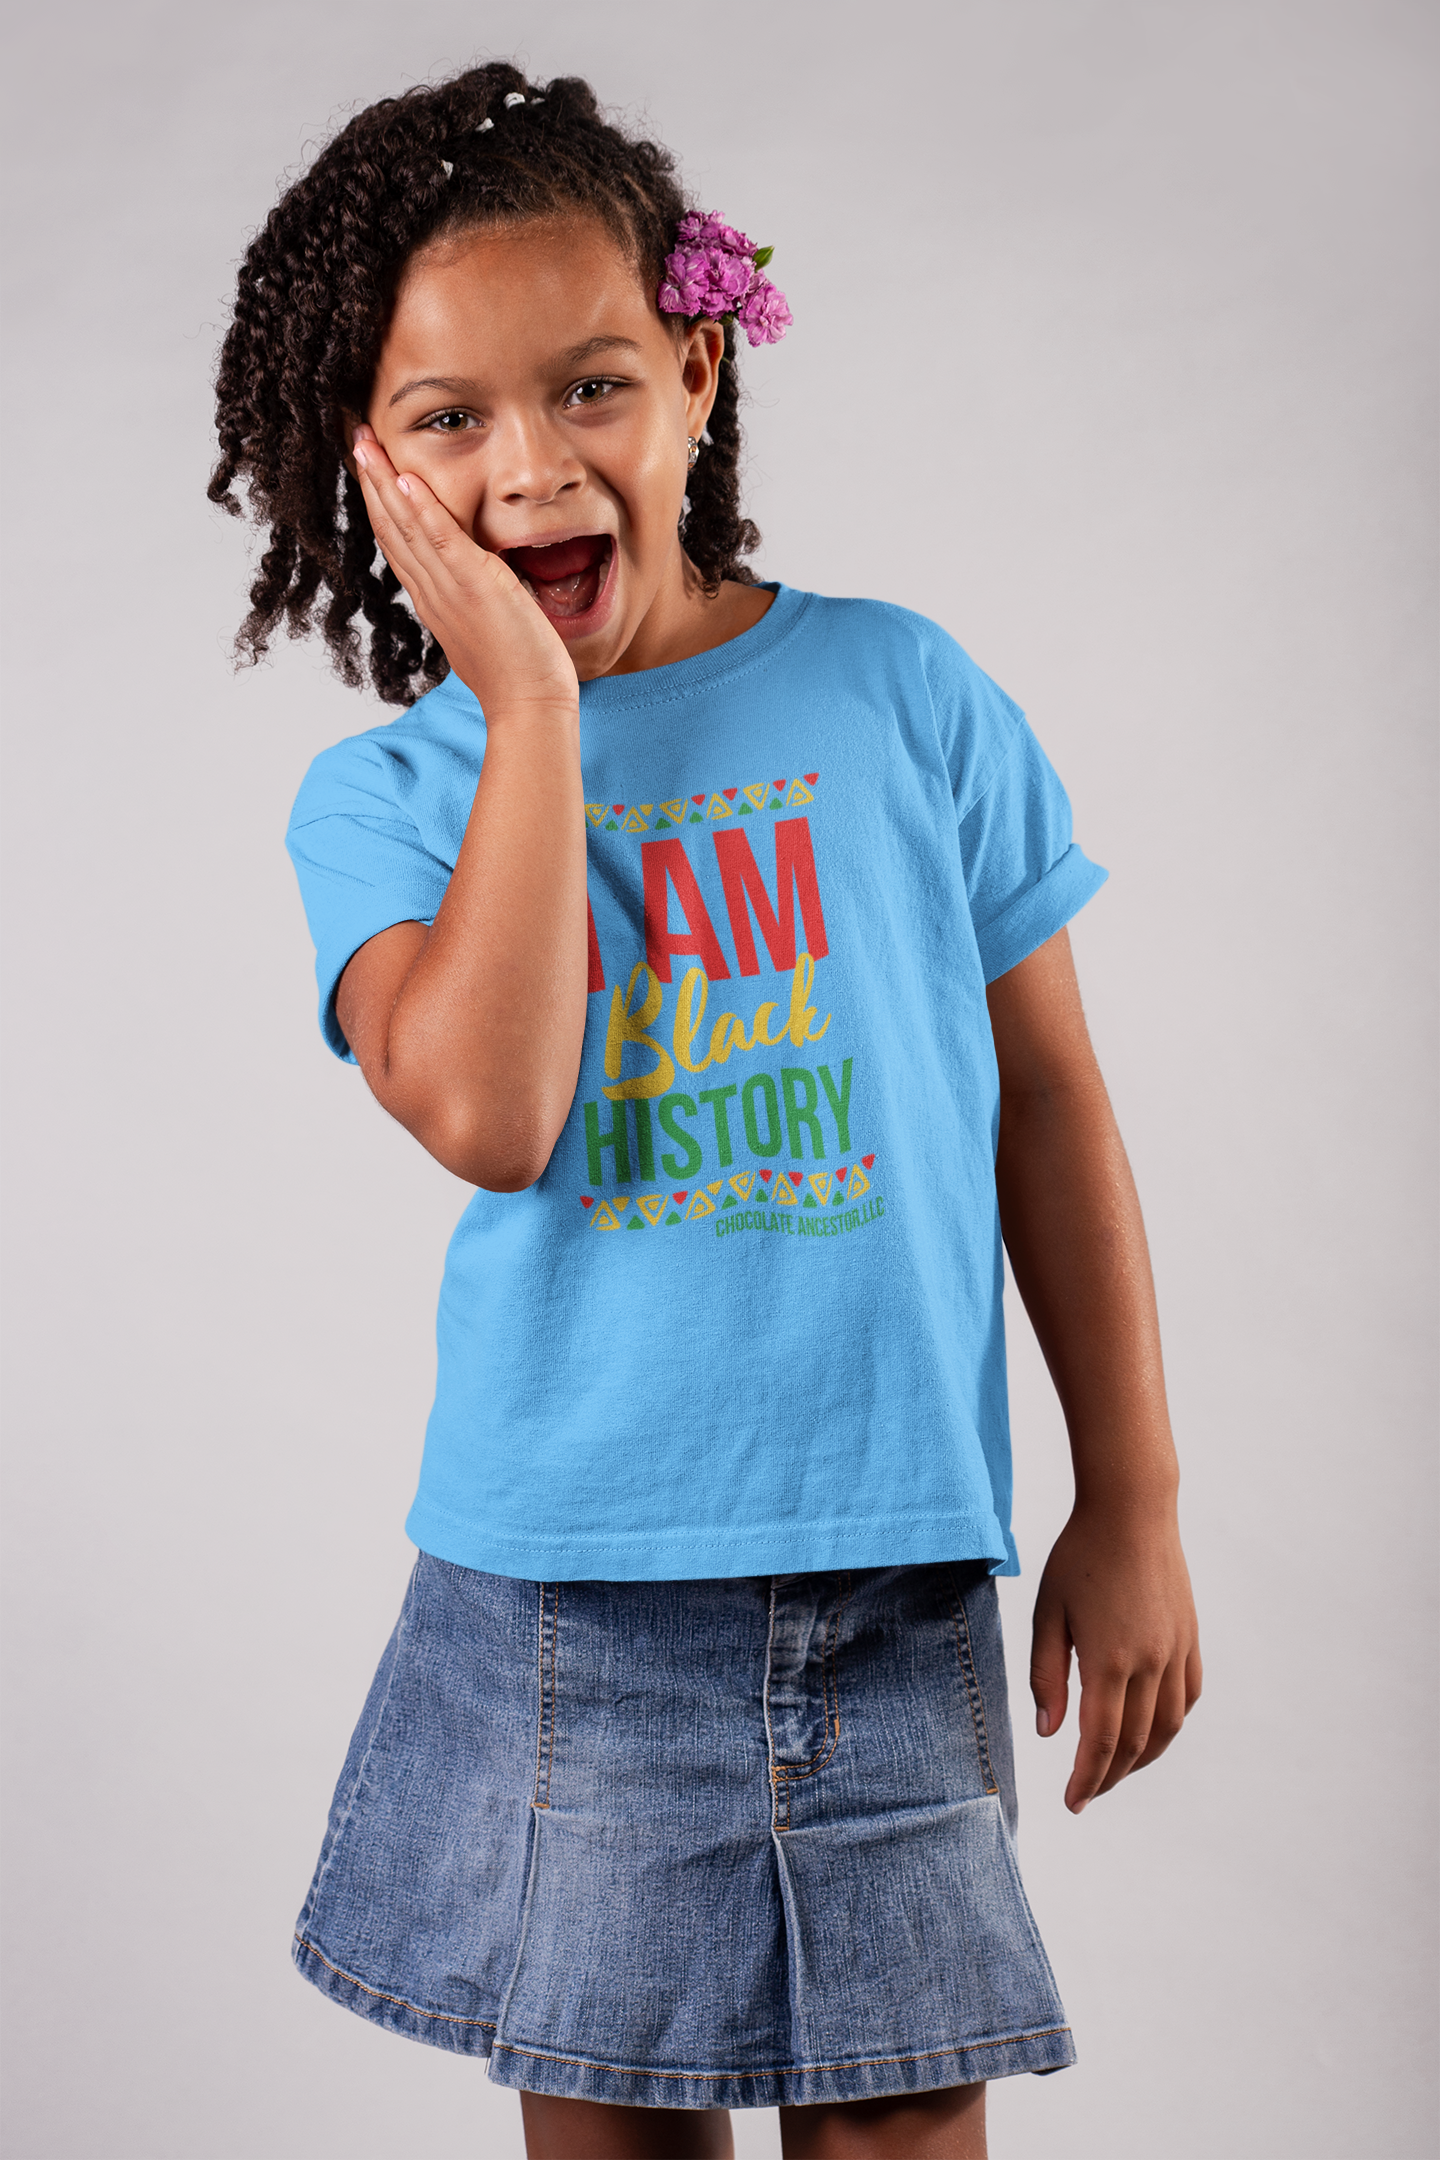 I Am Black History Kids' T-Shirt (Style 2)